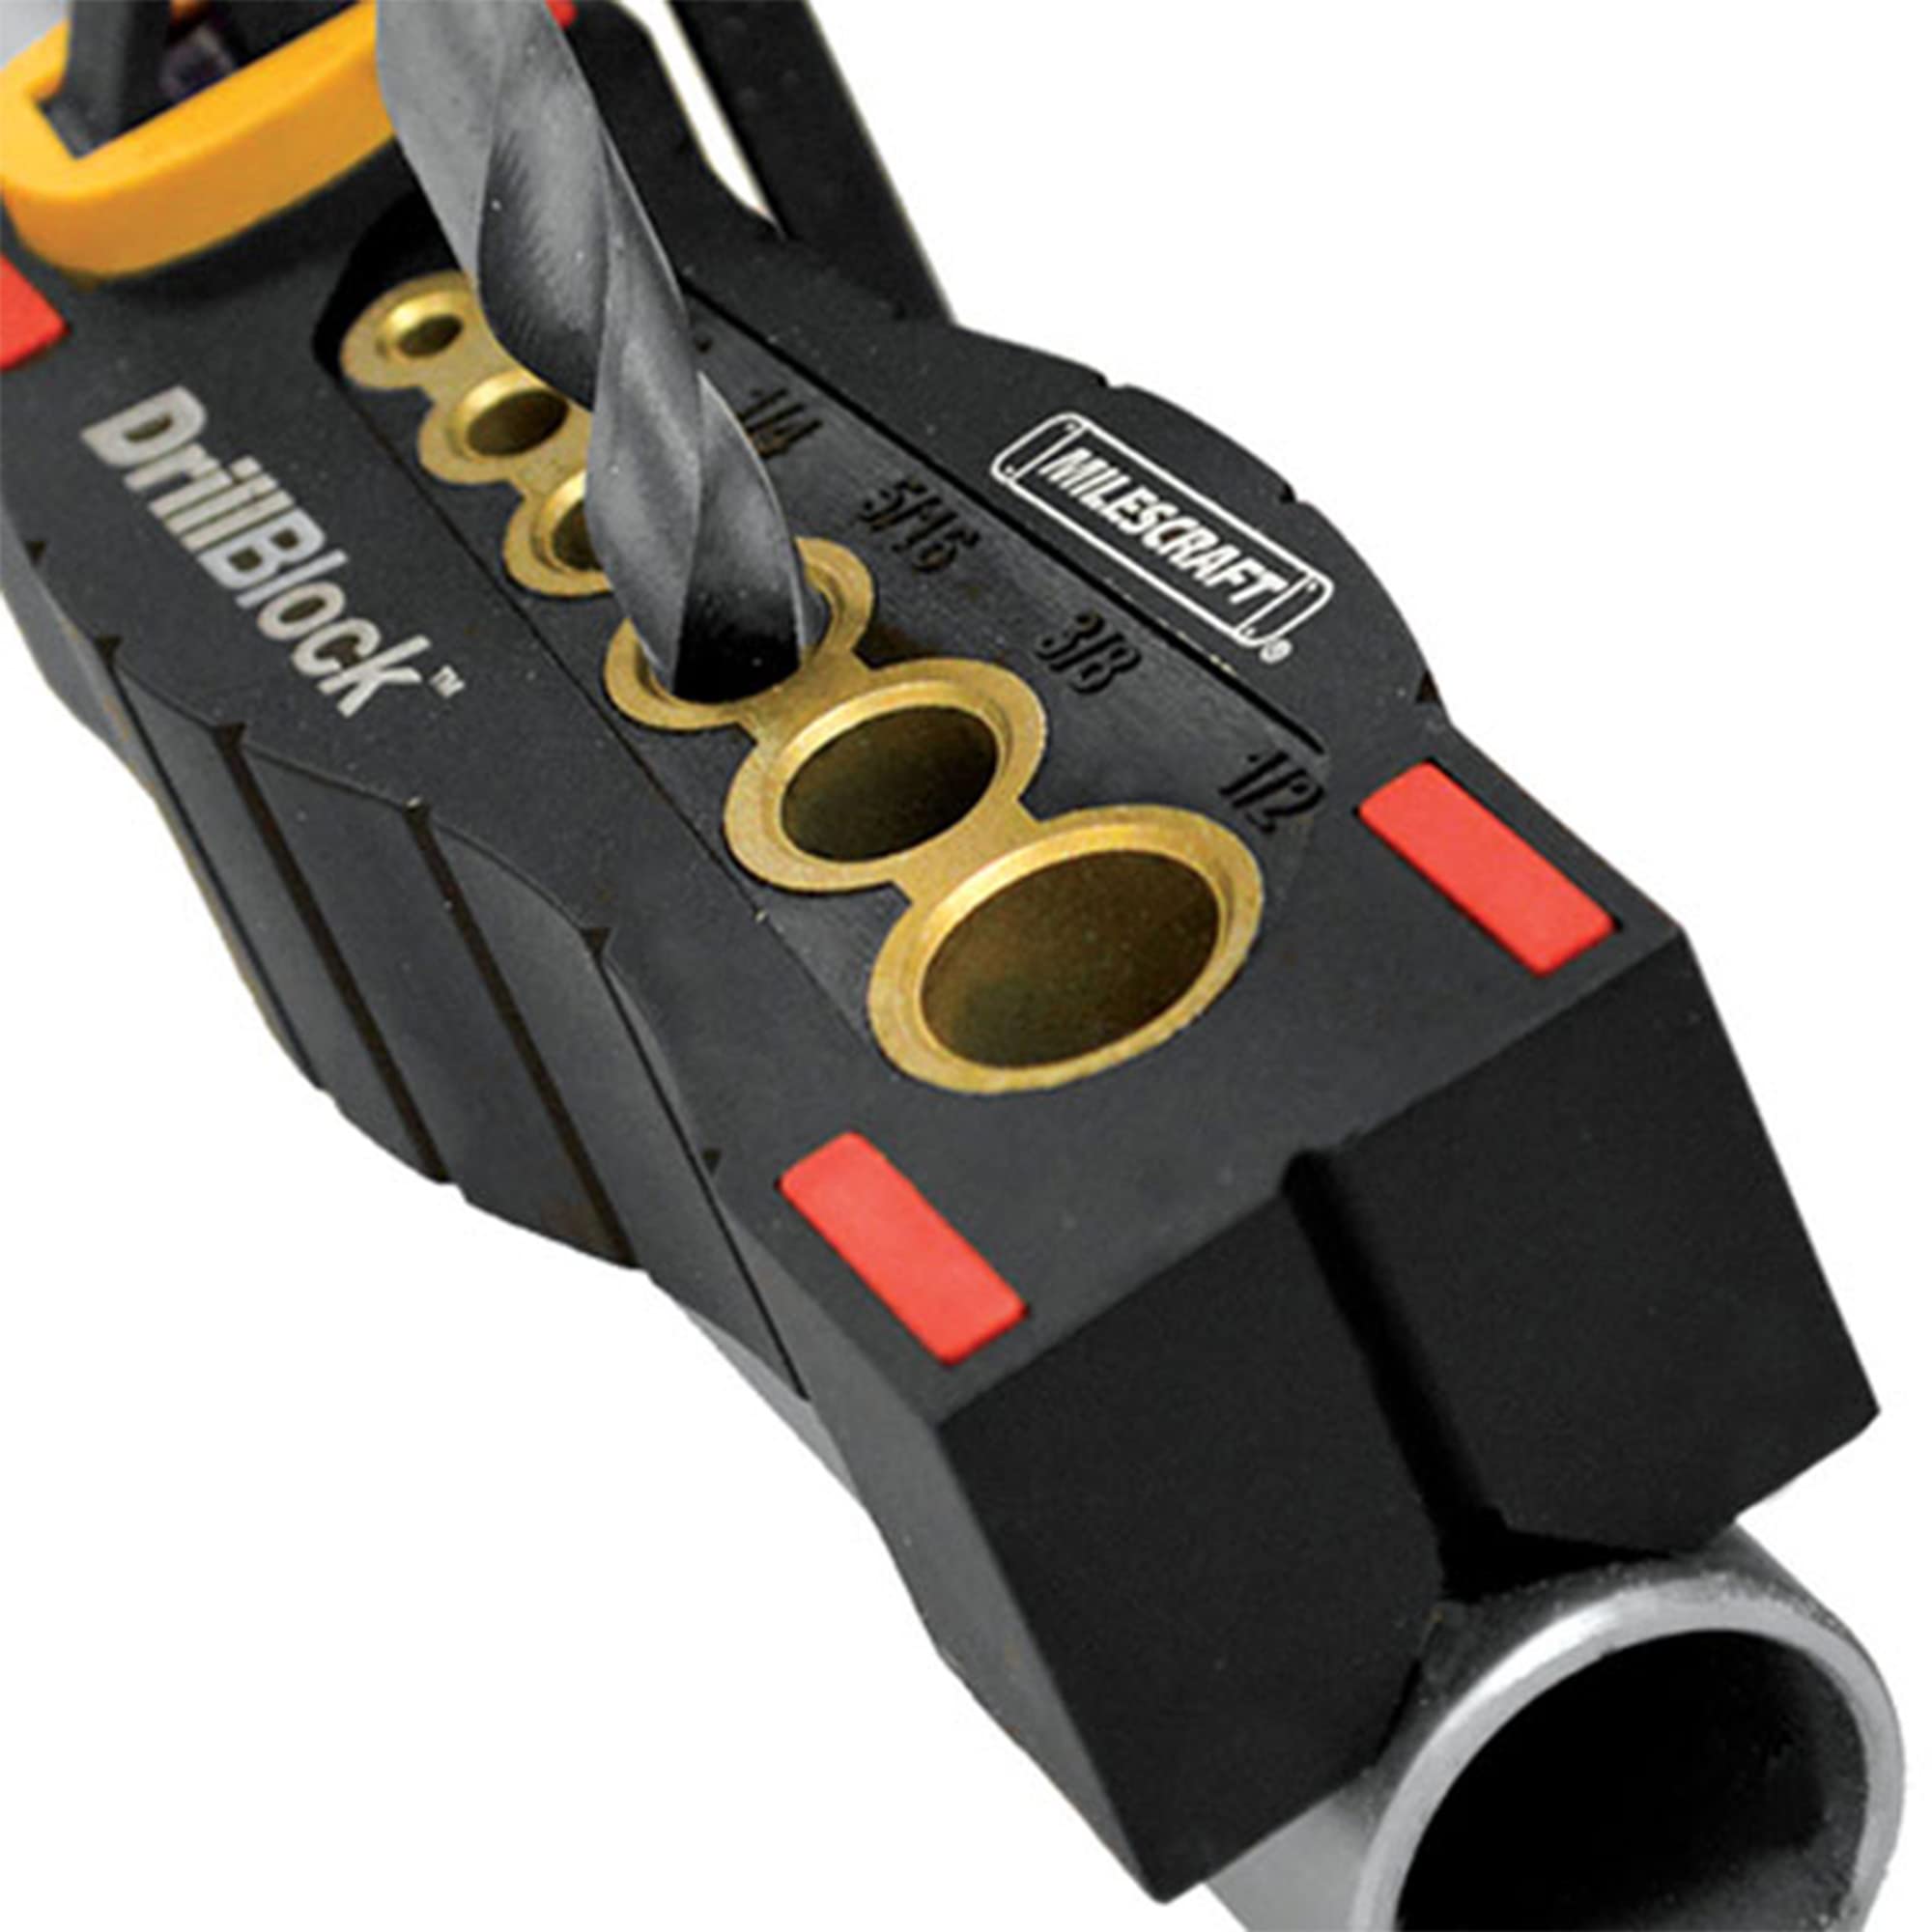 Milescraft 1312 DrillBlock- Handheld Drill Guide